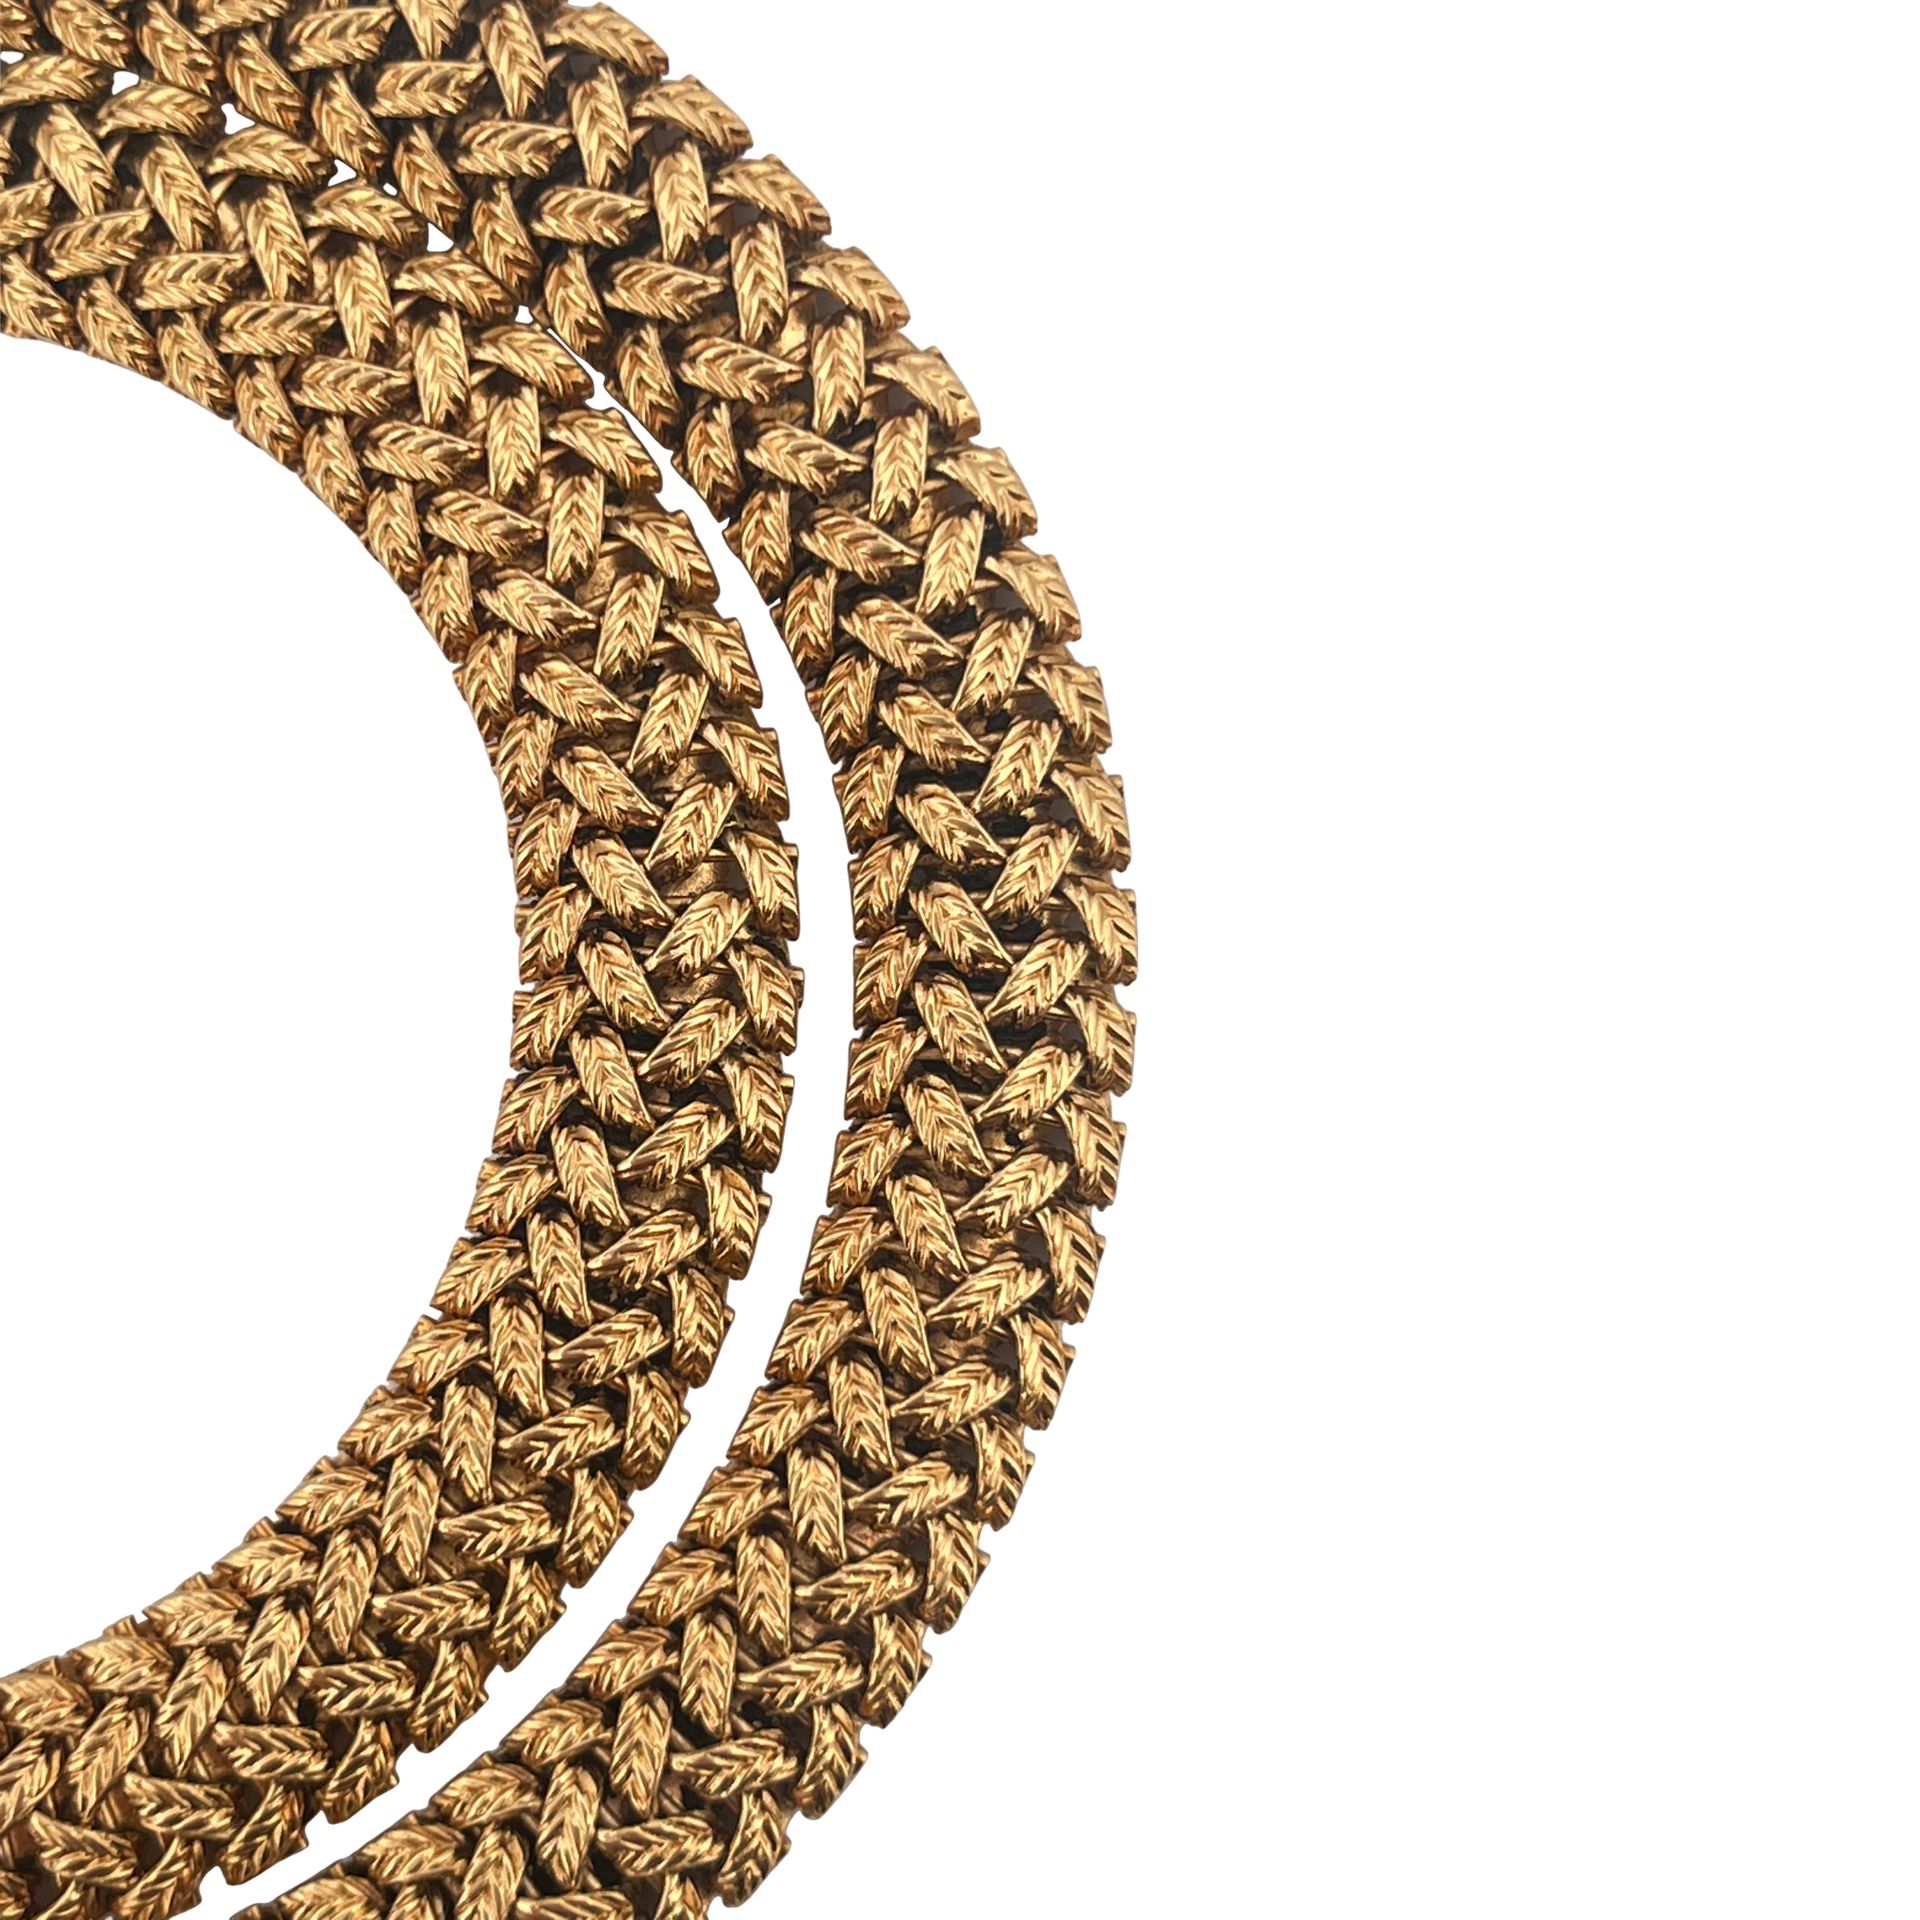 Null 项链
拿着一个精雕细琢的波罗奈斯环节。镶嵌在18K黄金中。安全扣。法国的工作。 
长度：49厘米。
宽度：1.15厘米。
毛重：98.98克。

一条&hellip;